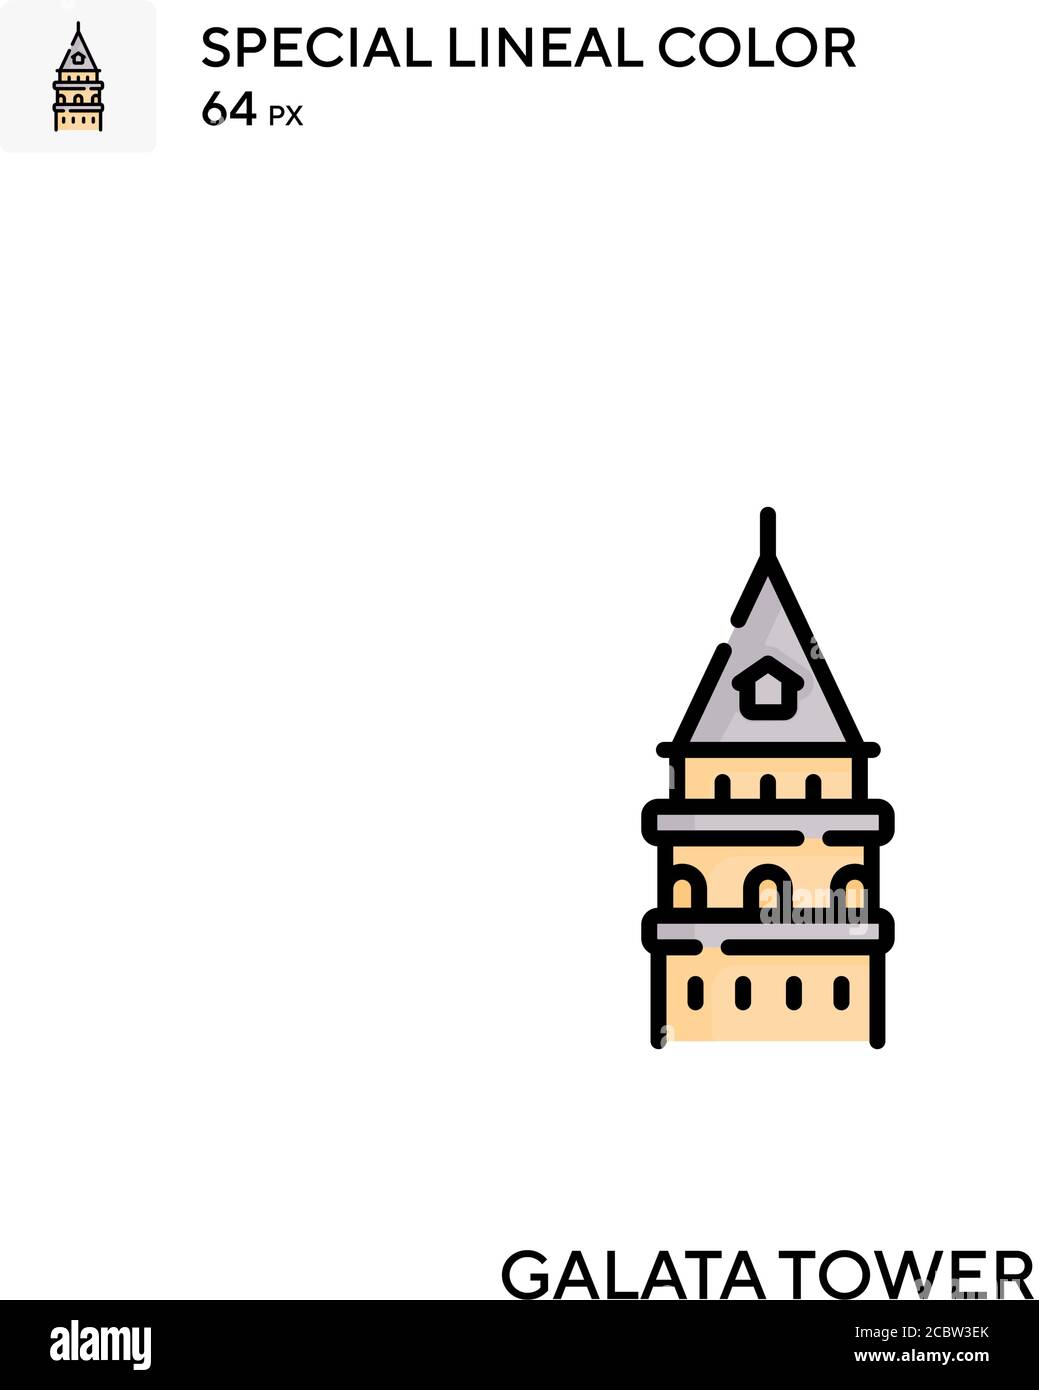 Galata Tower Spezielle lineare Farbe Vektor-Symbol. Galata Tower Icons für Ihr Business-Projekt Stock Vektor